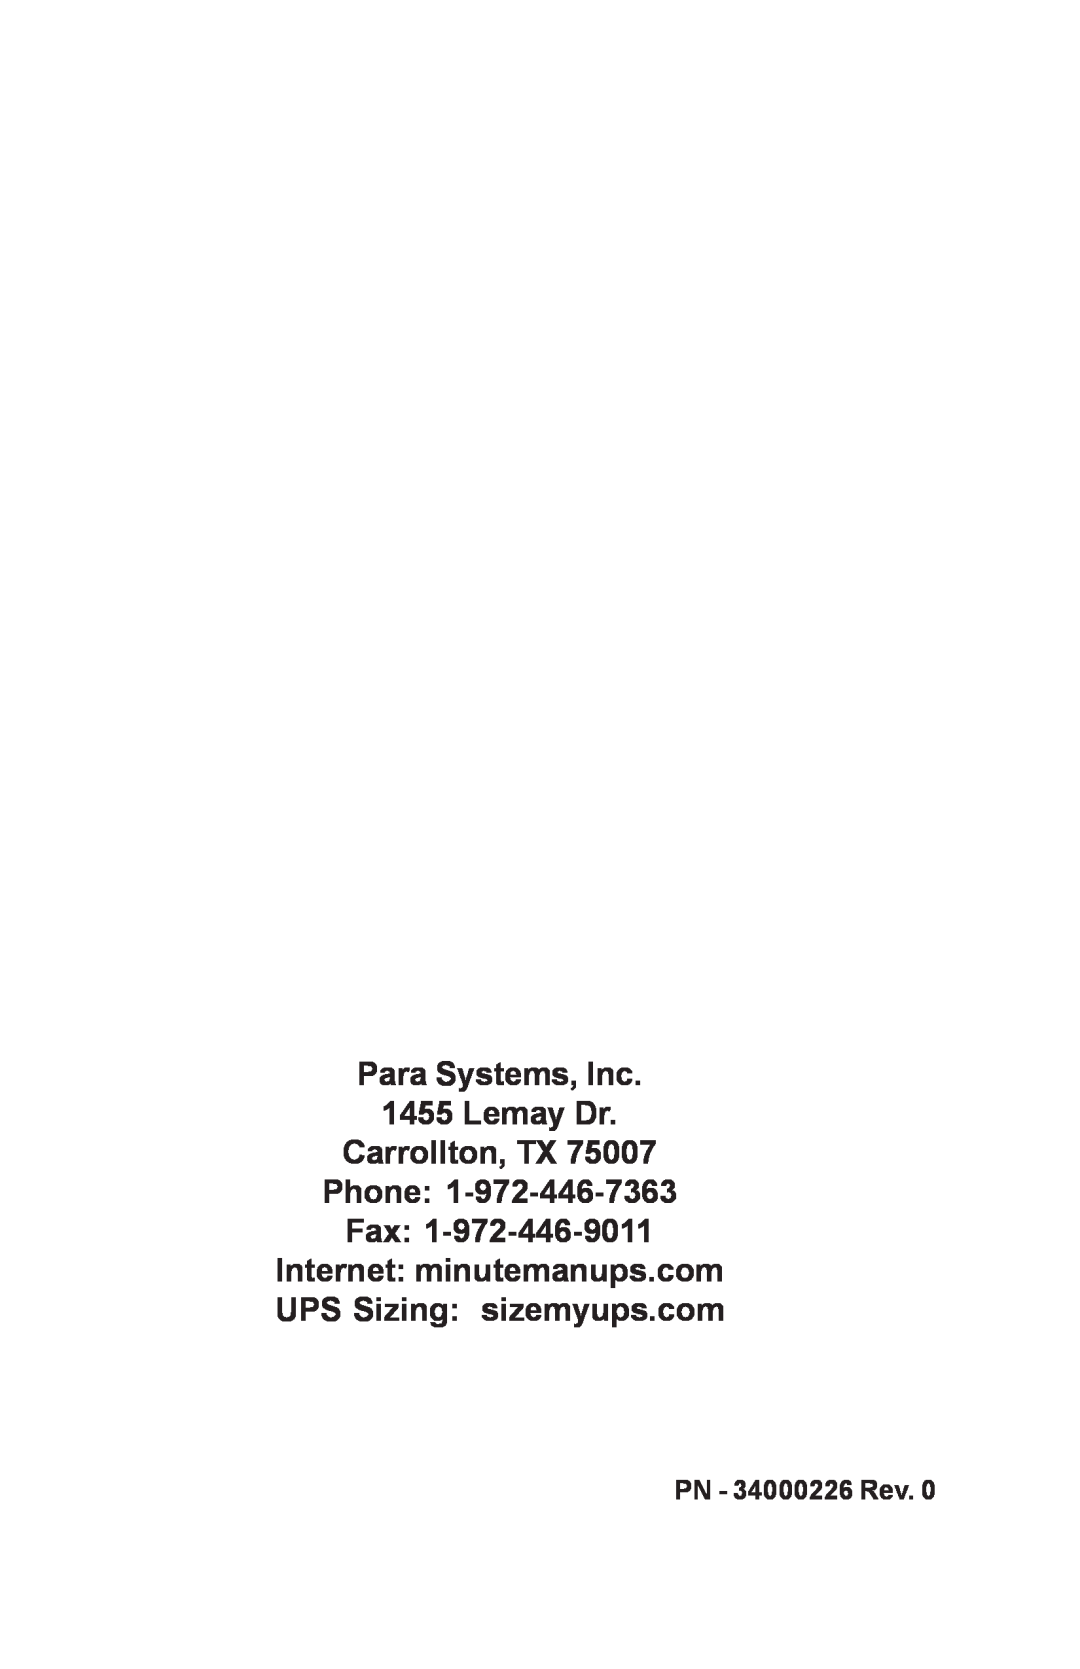 Minuteman UPS PRO-E user manual Para Systems, Inc 1455 Lemay Dr Carrollton, TX Phone Fax, PN - 34000226 Rev 